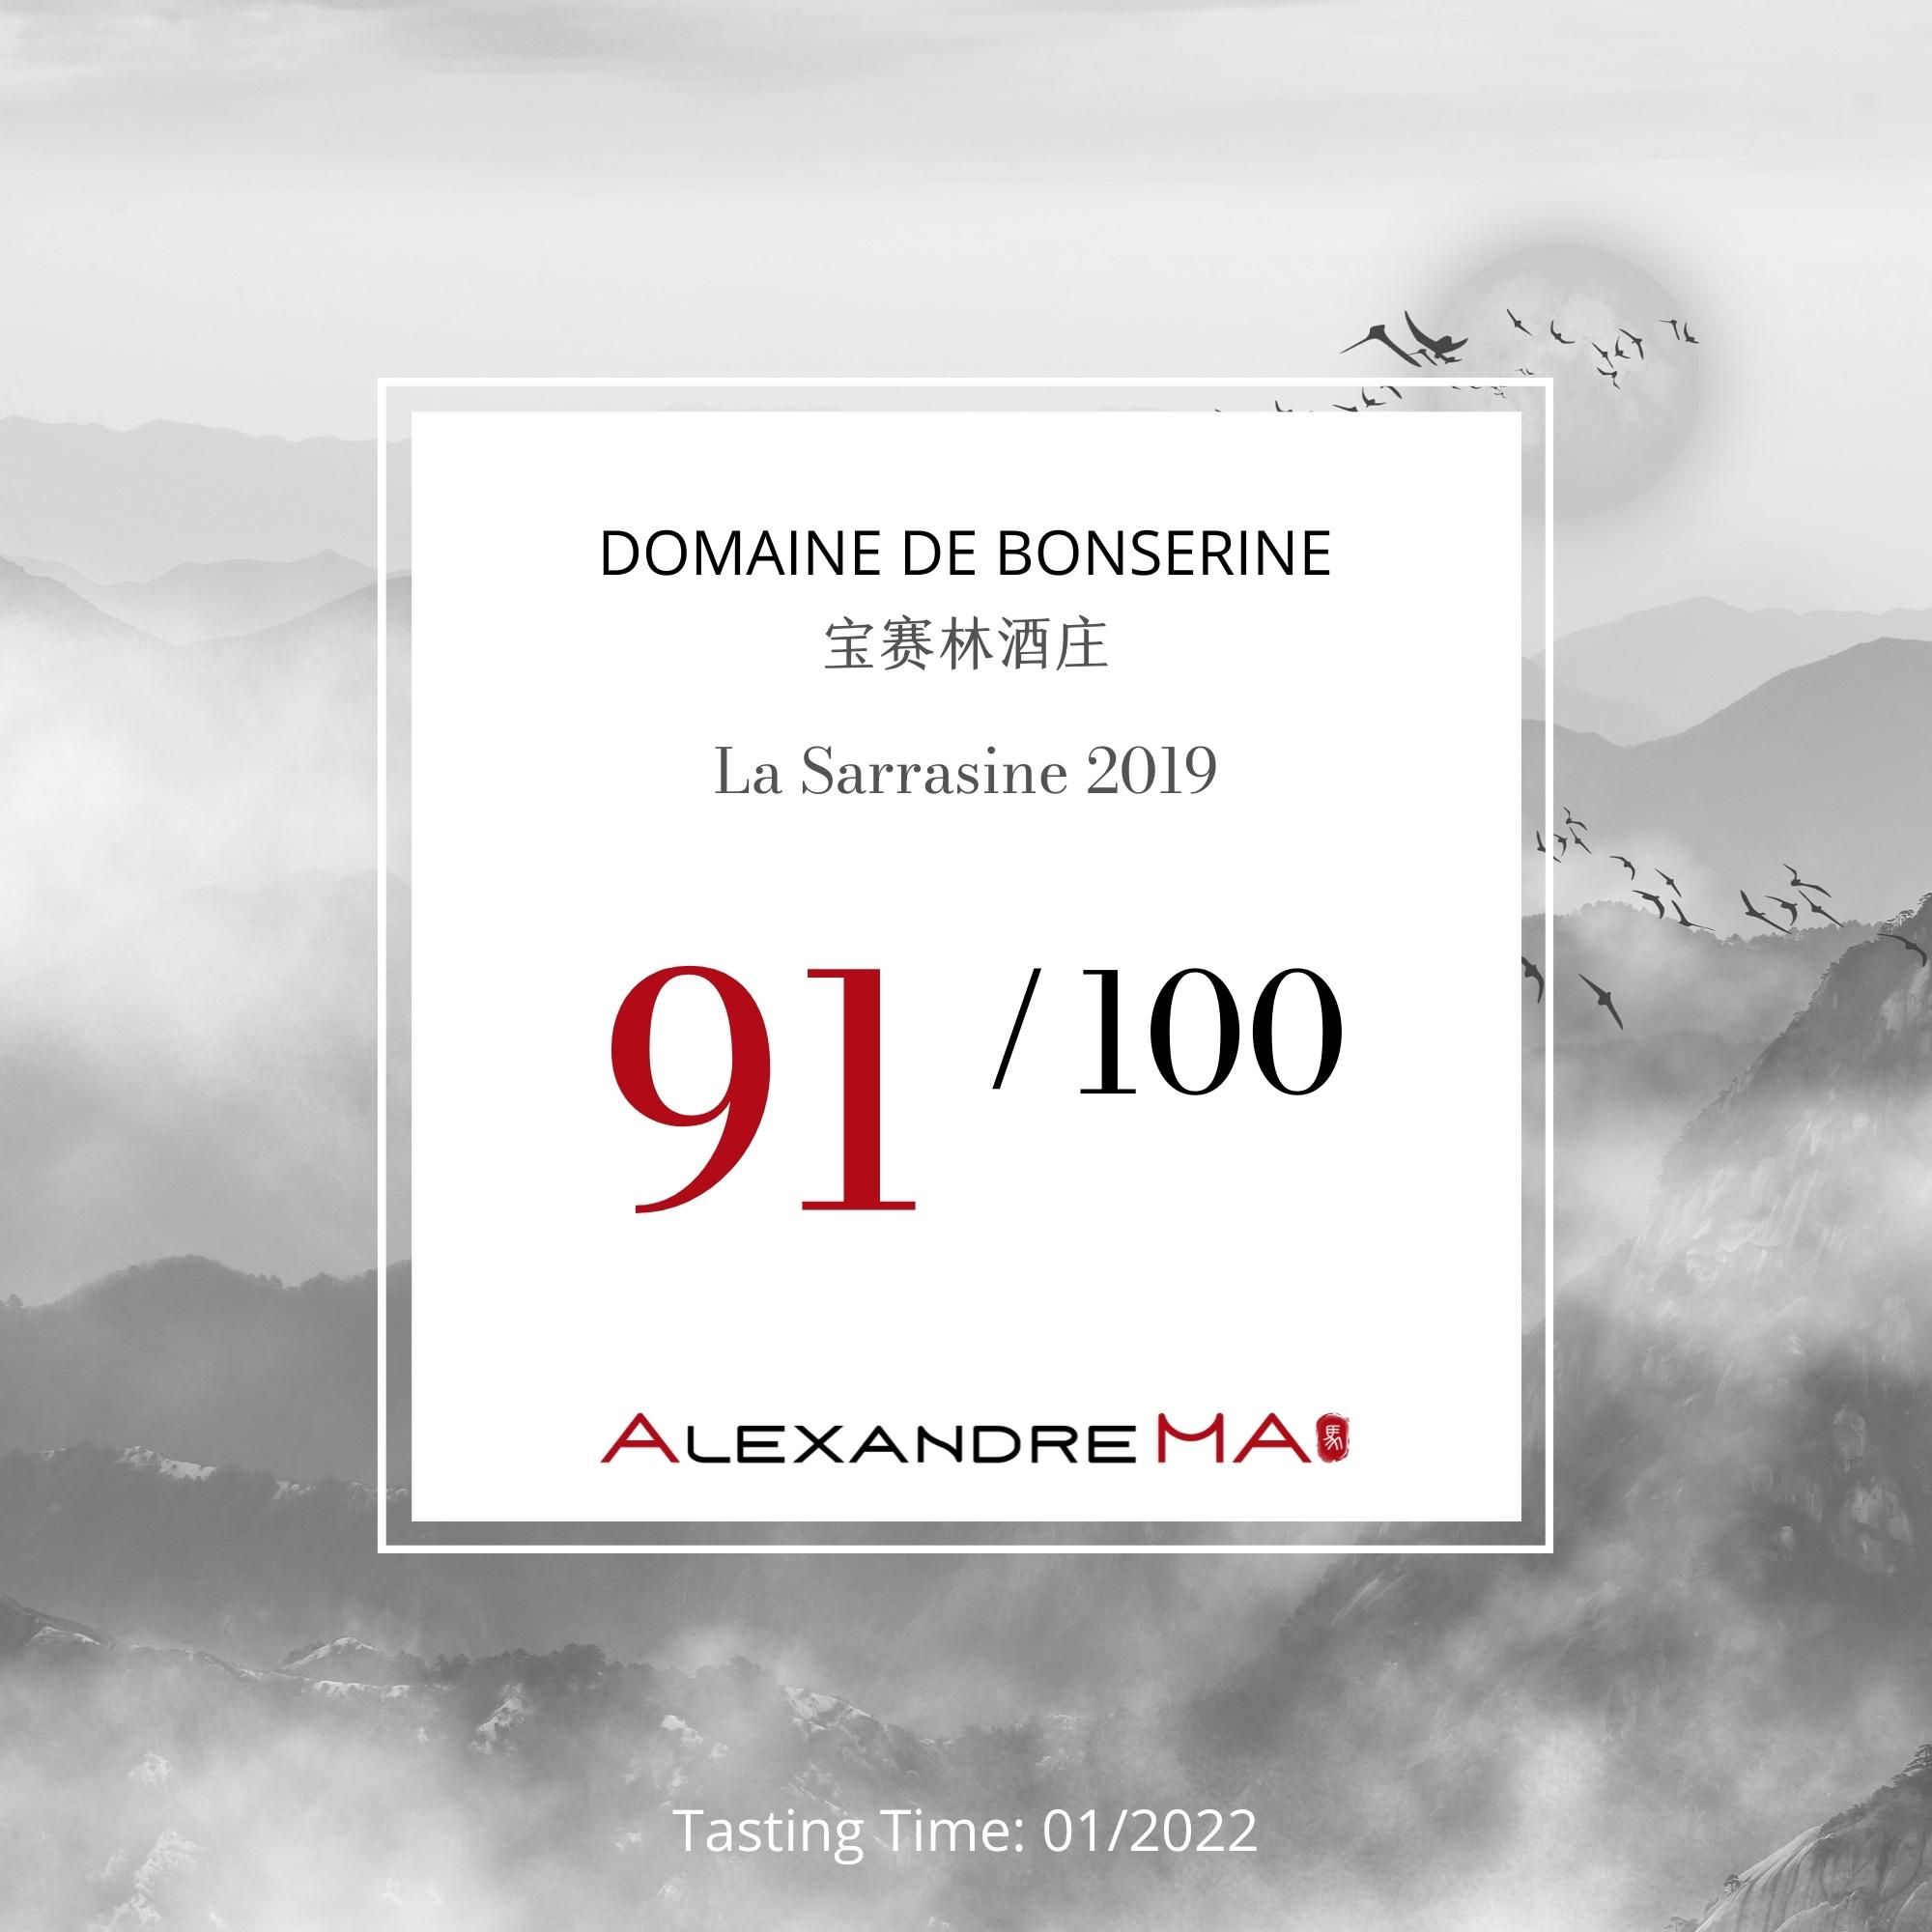 Domaine de Bonserine宝赛林酒庄-La Sarrasine 2019 - Alexandre Ma